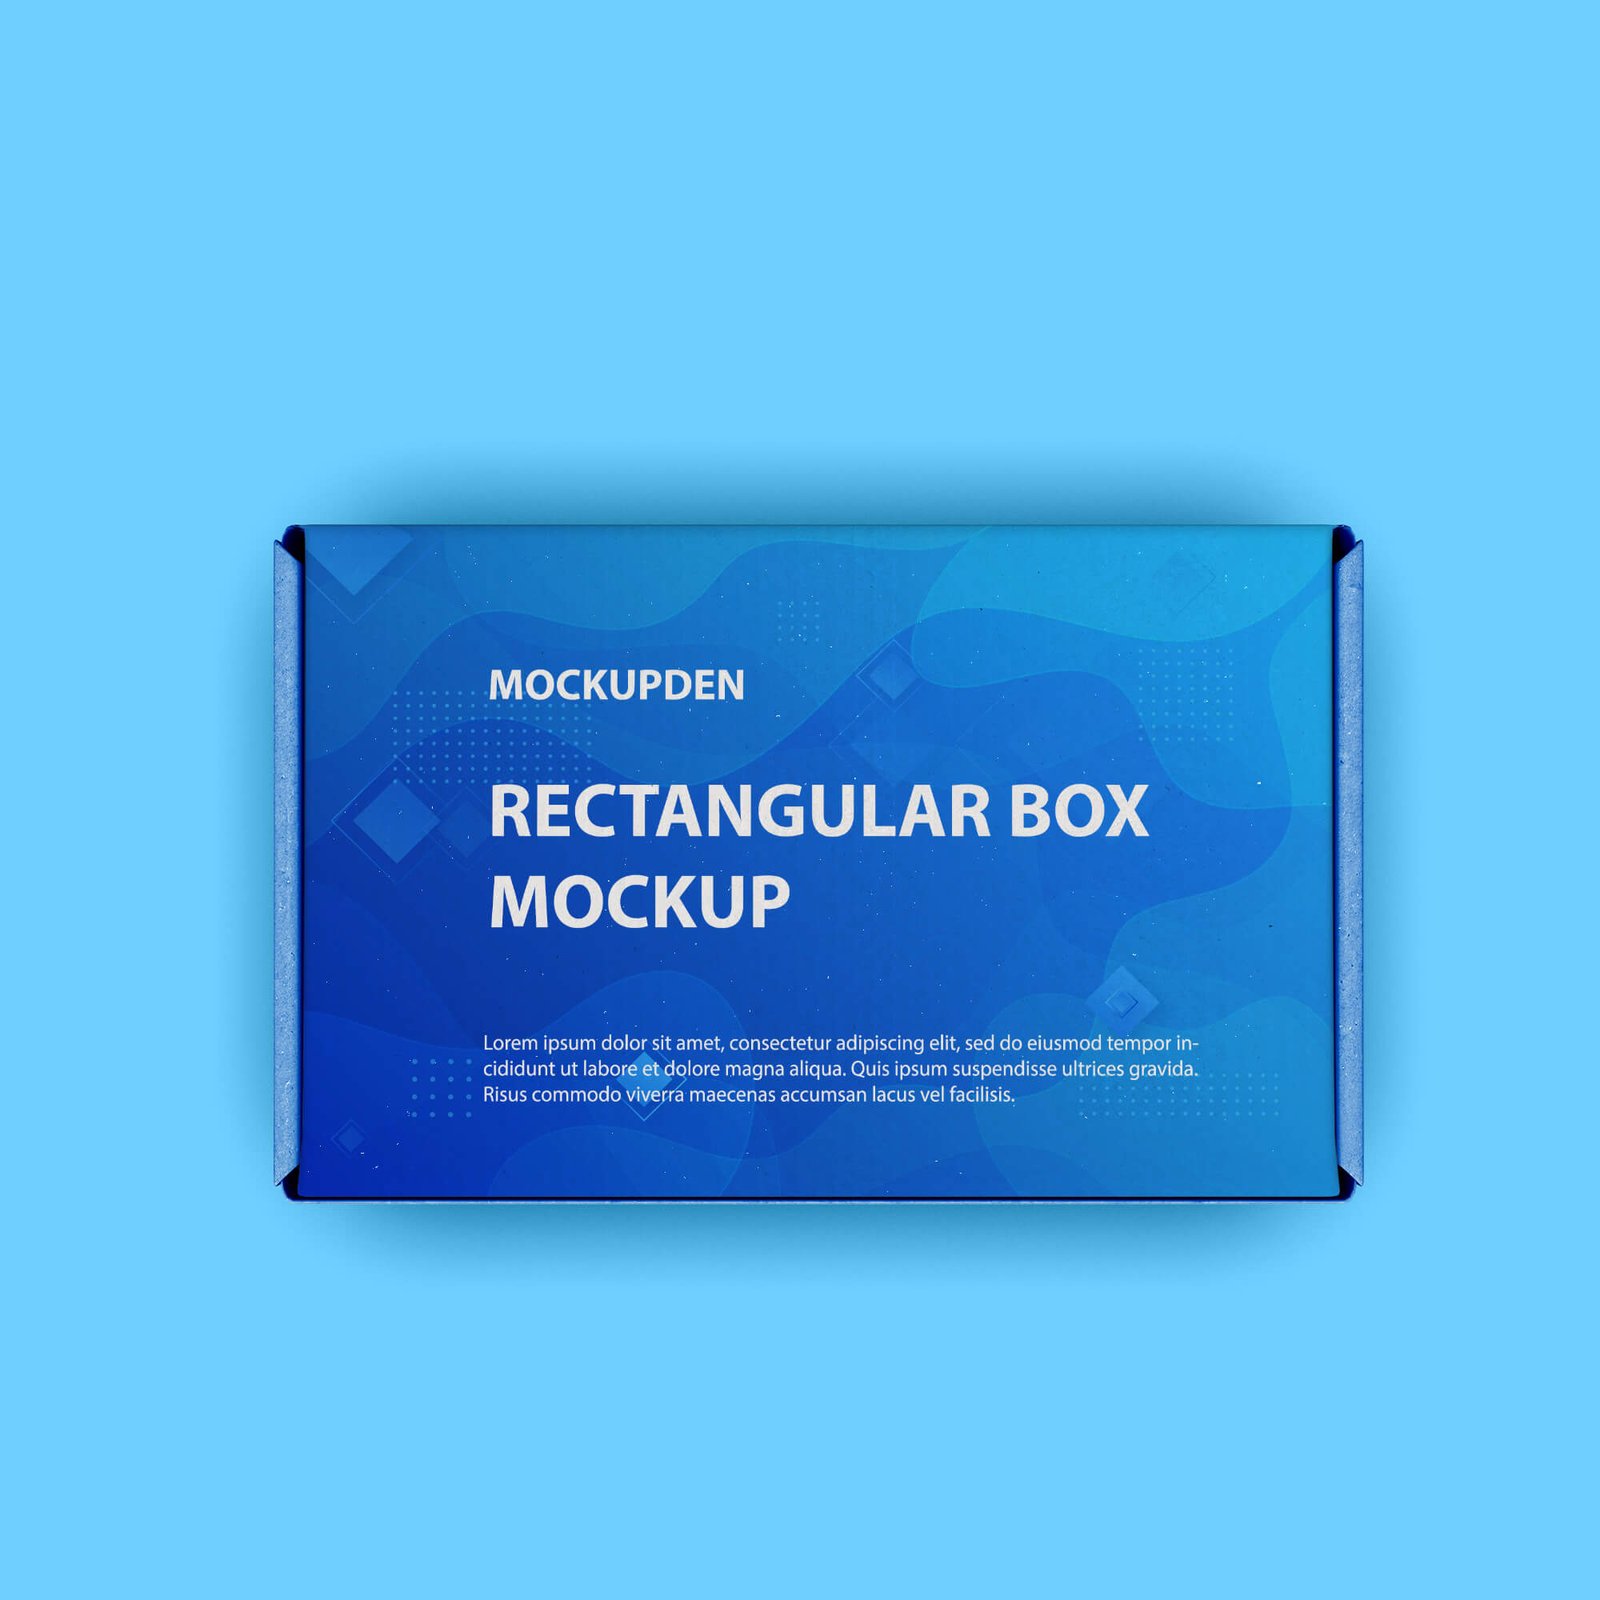 Design Free Rectangular Box Mockup PSD Template